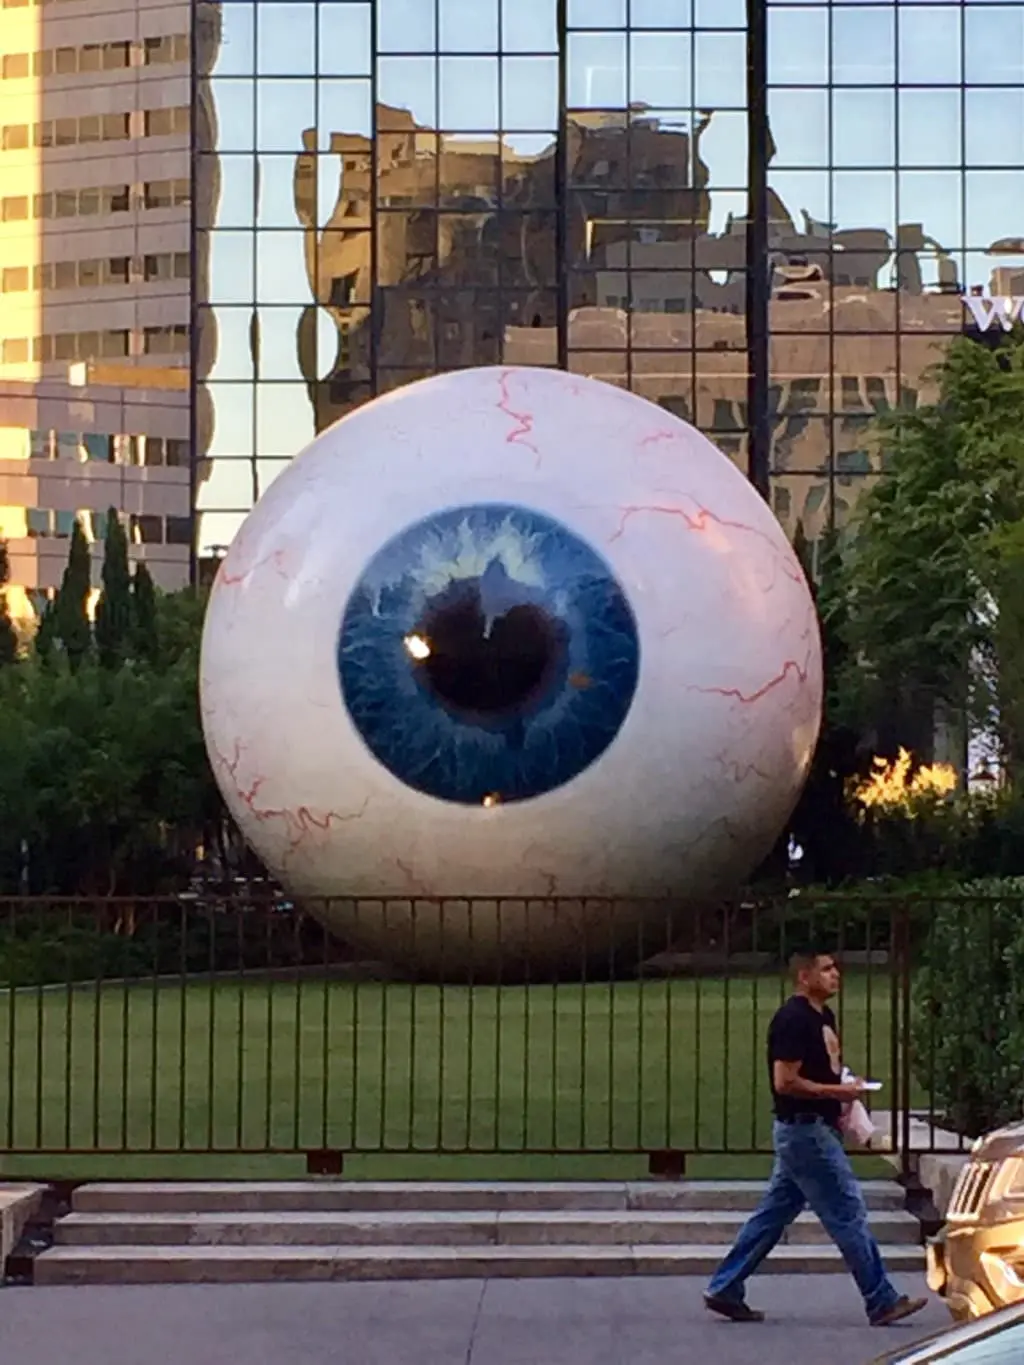 Giant Eye Sculpture in Texas